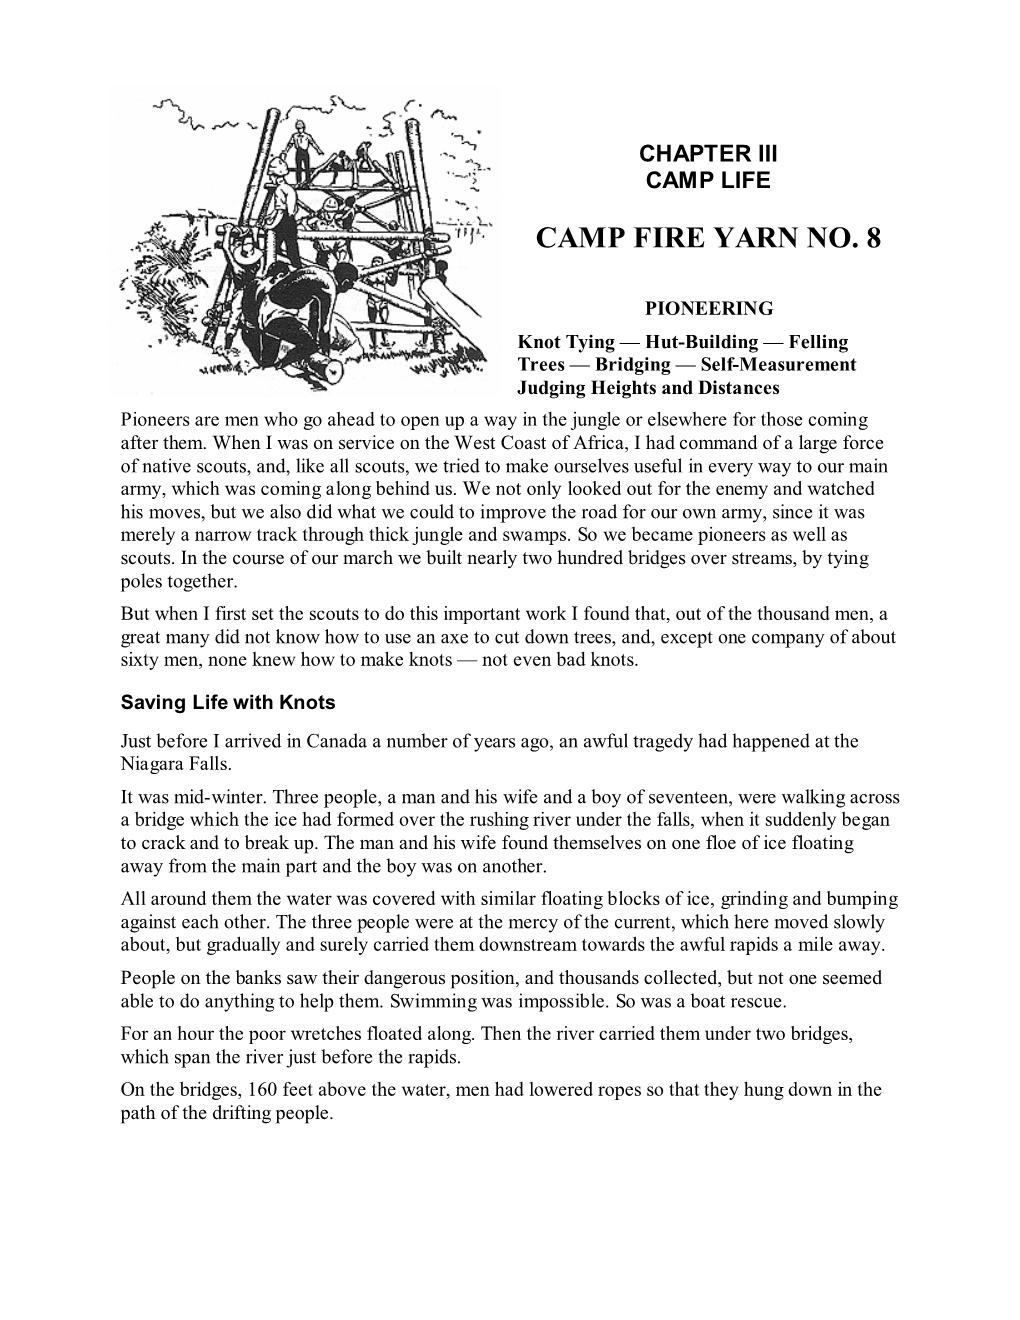 Camp Fire Yarn No. 8